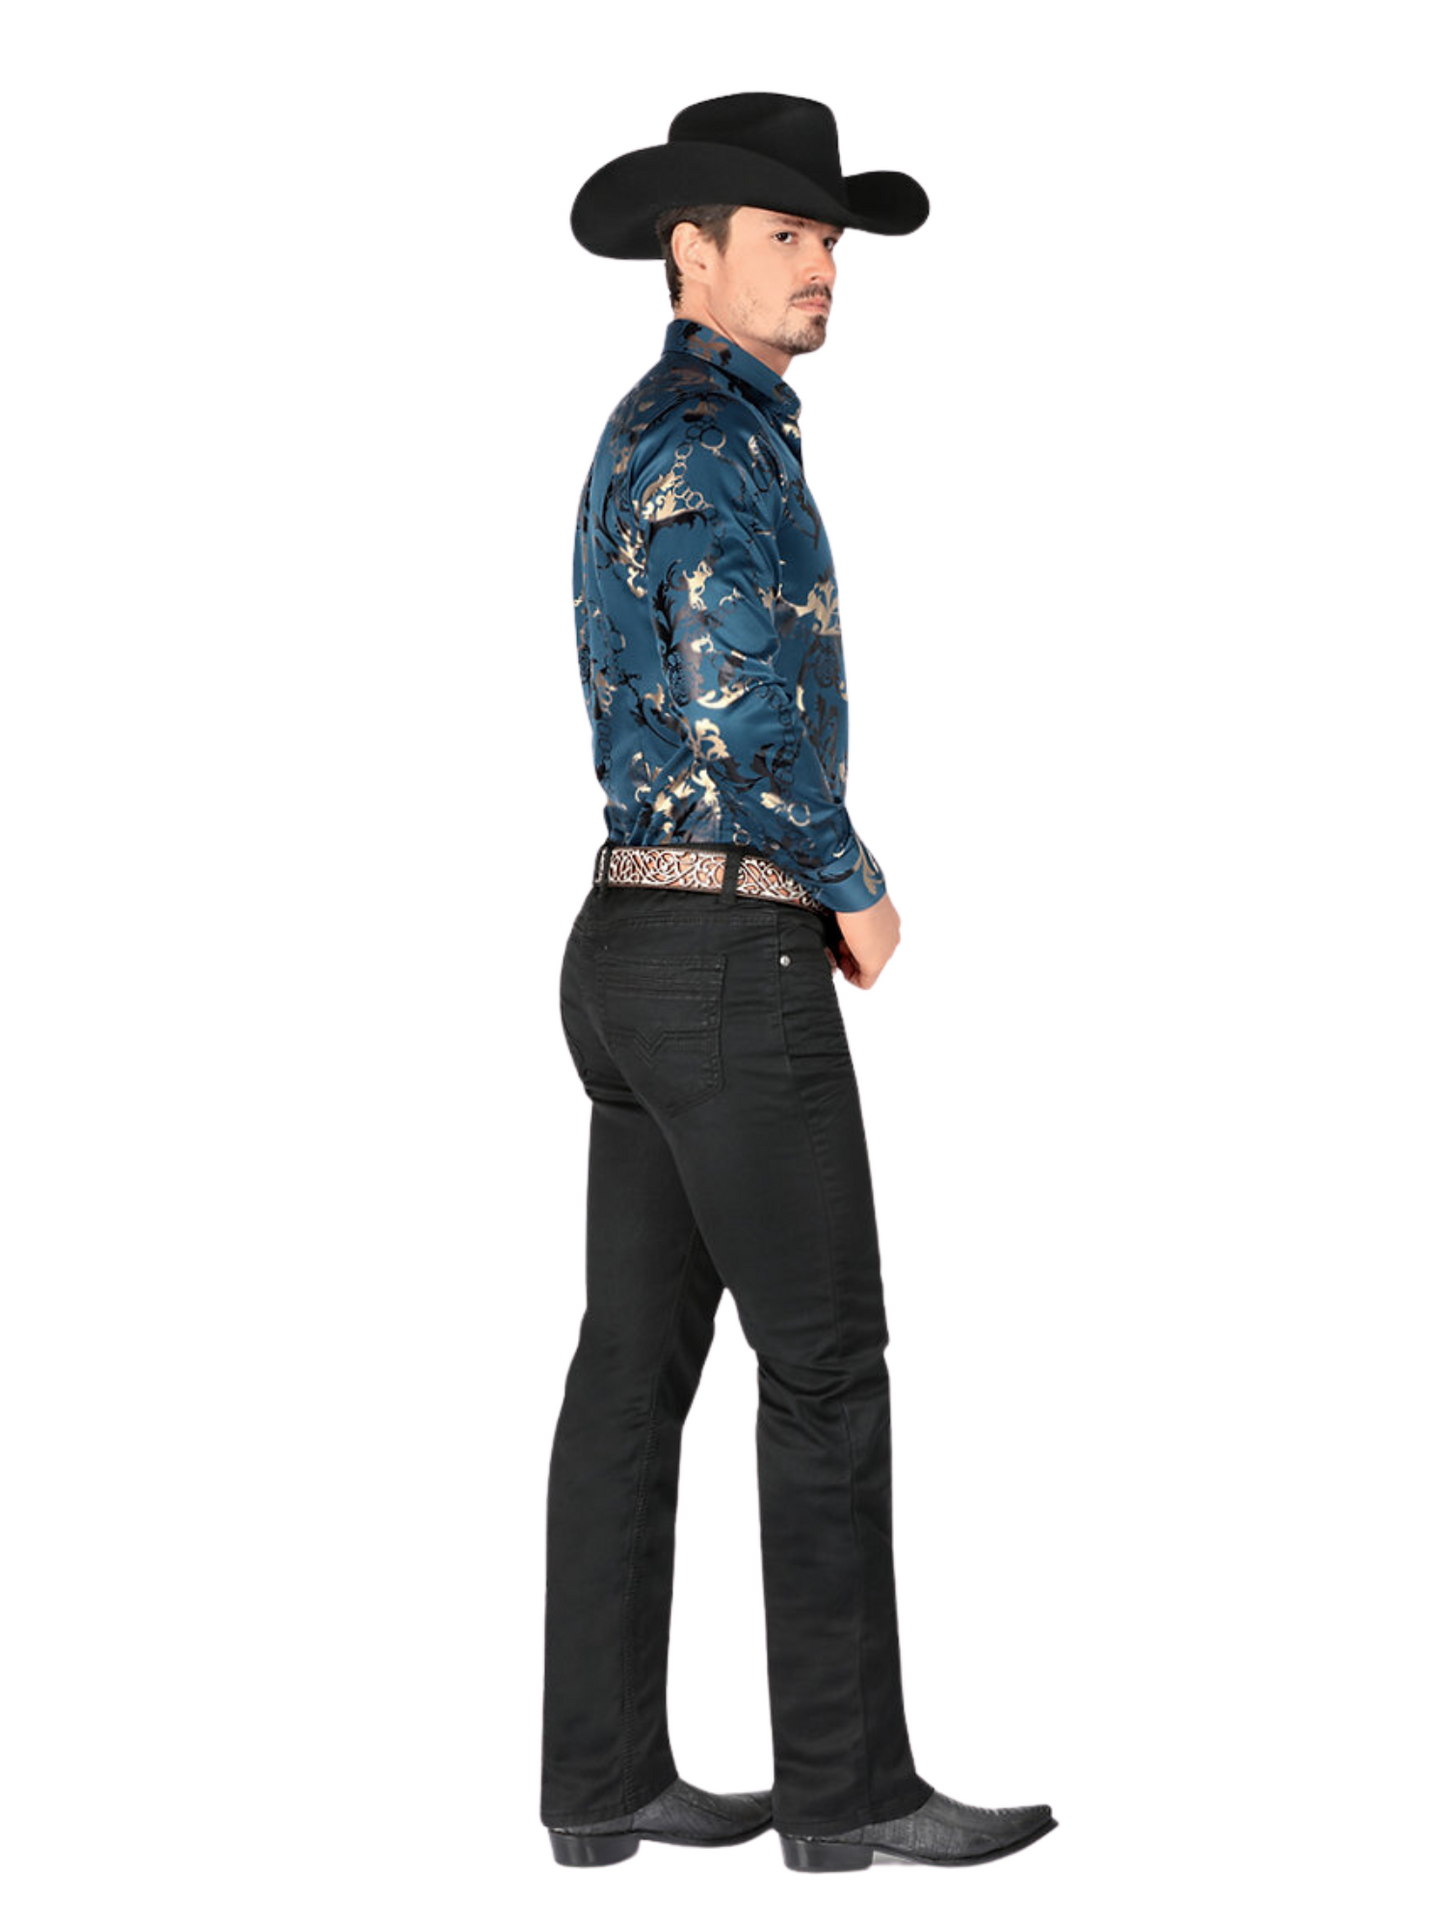 Stretch Denim Jeans for Men 'Montero' - ID: 5601 Denim Jeans Montero